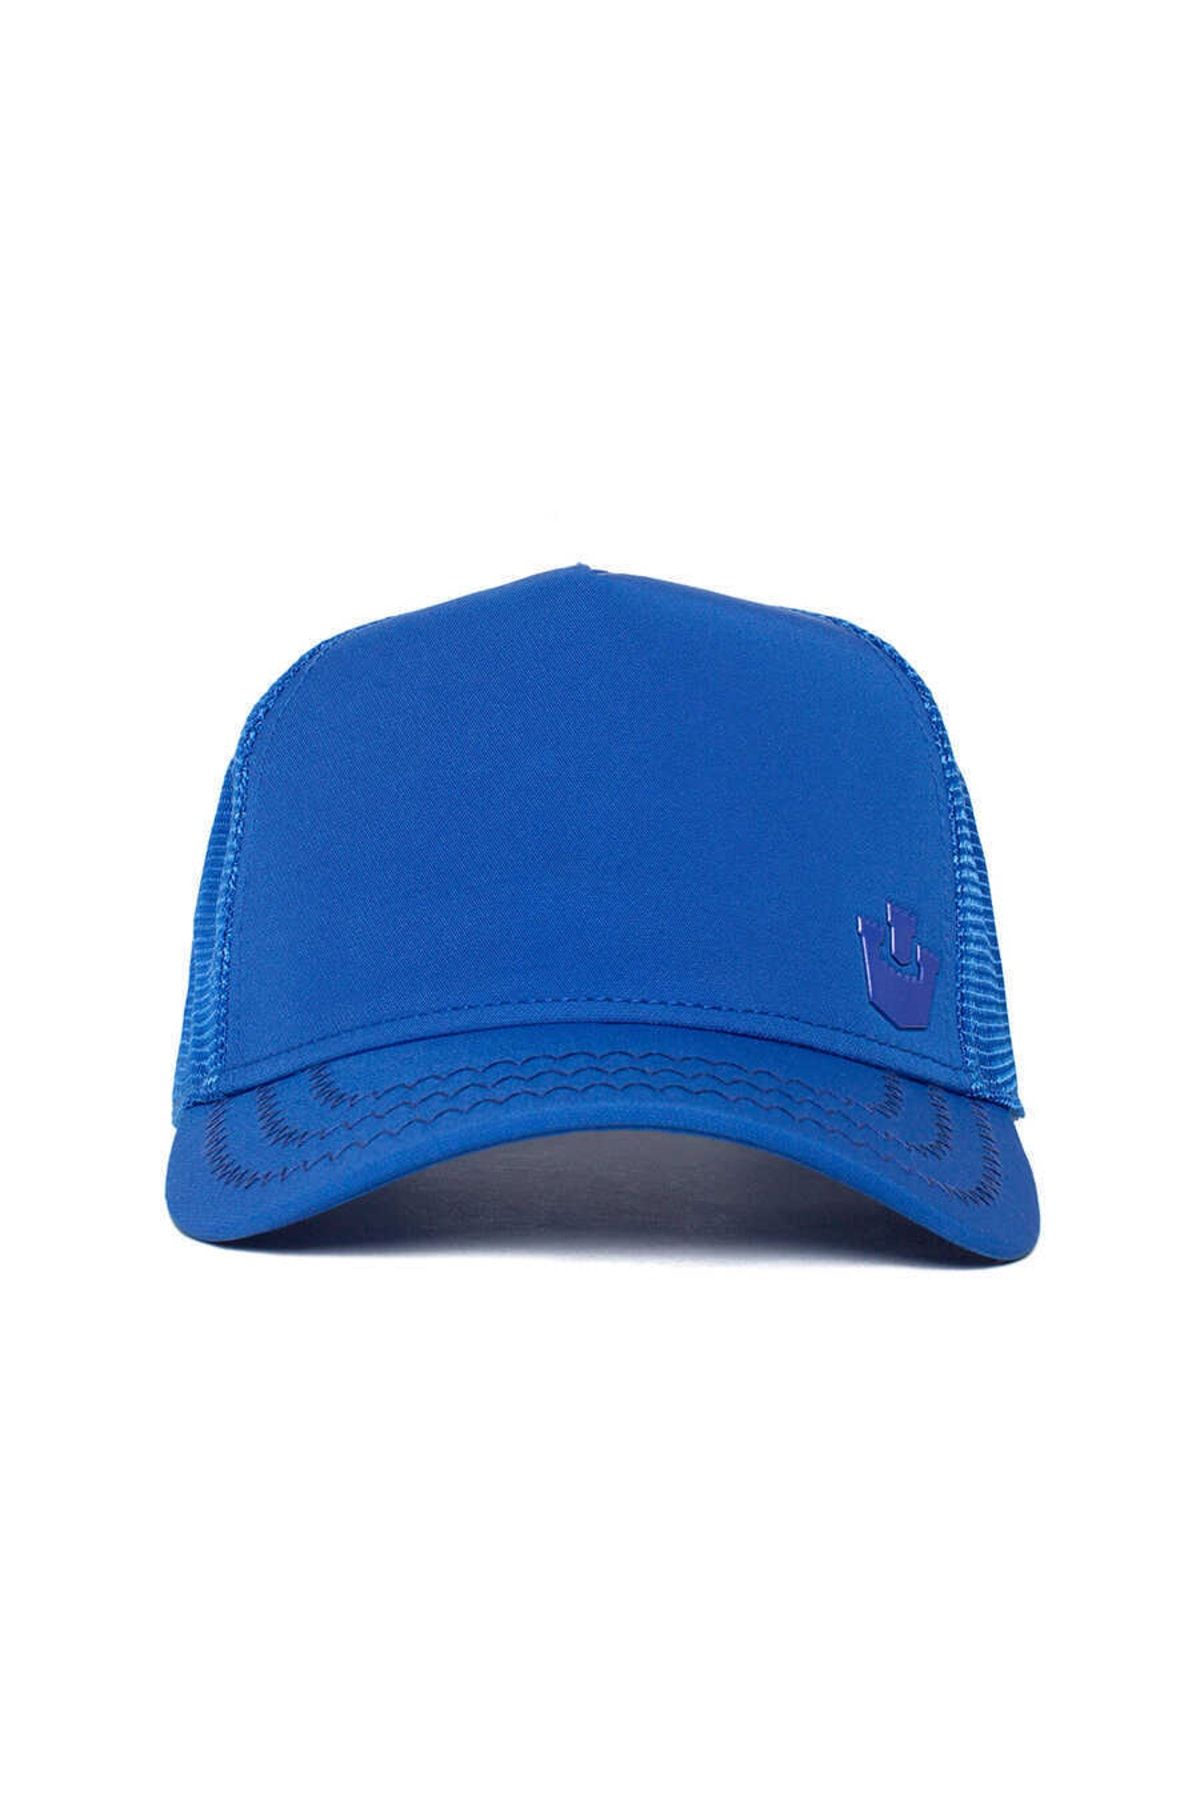 Goorin Bros Gateway Şapka 101-0784 Mavi Standart